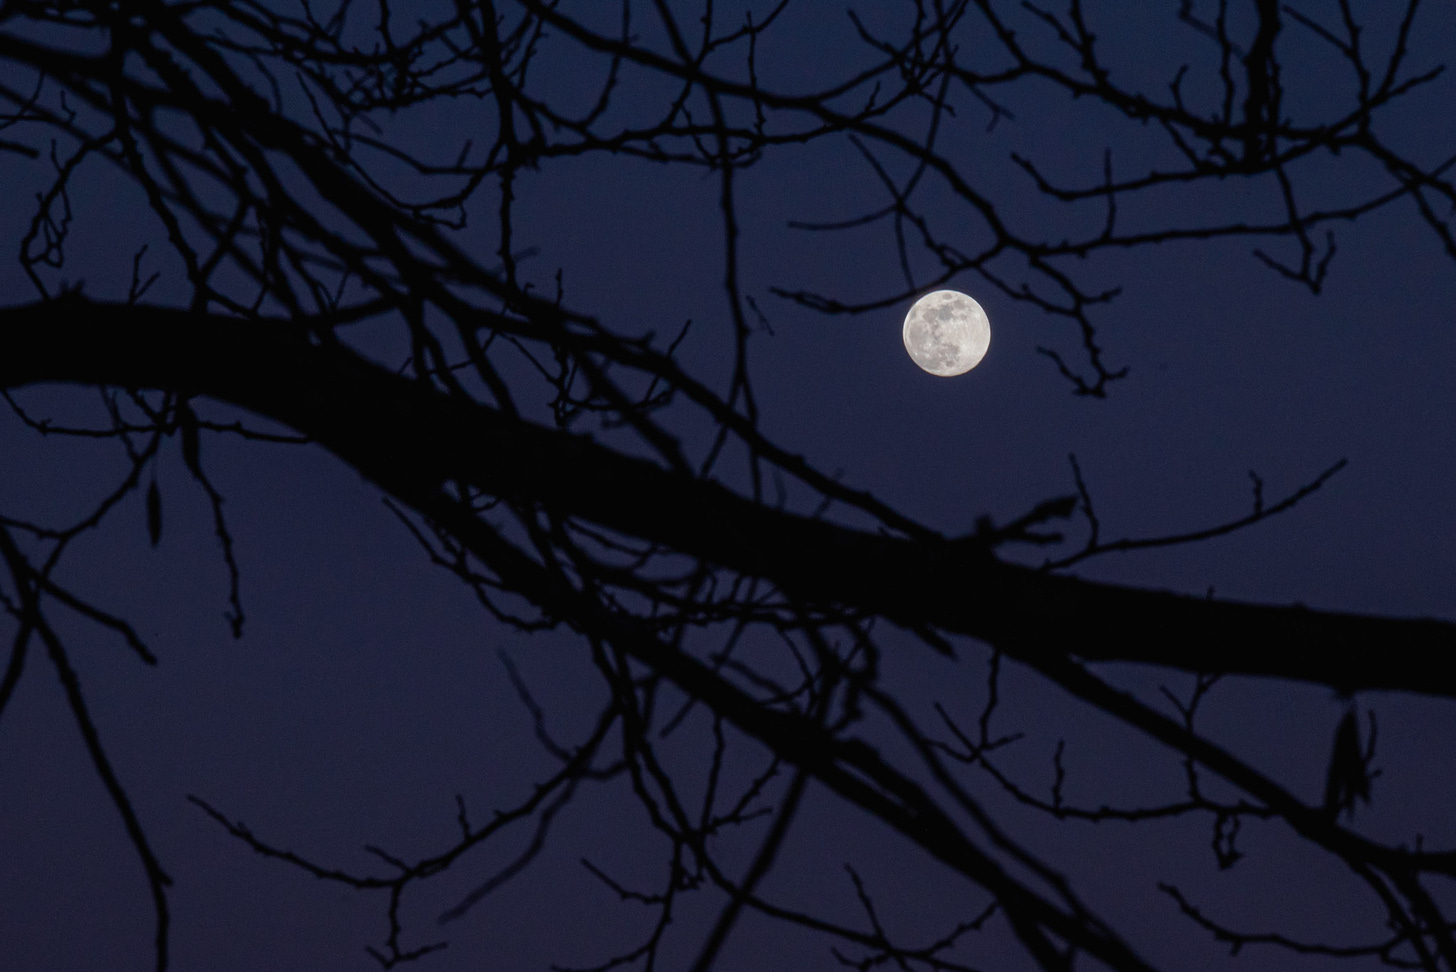 A full moon shining through the darkened, bared, tree limbs against the dark blue sky.